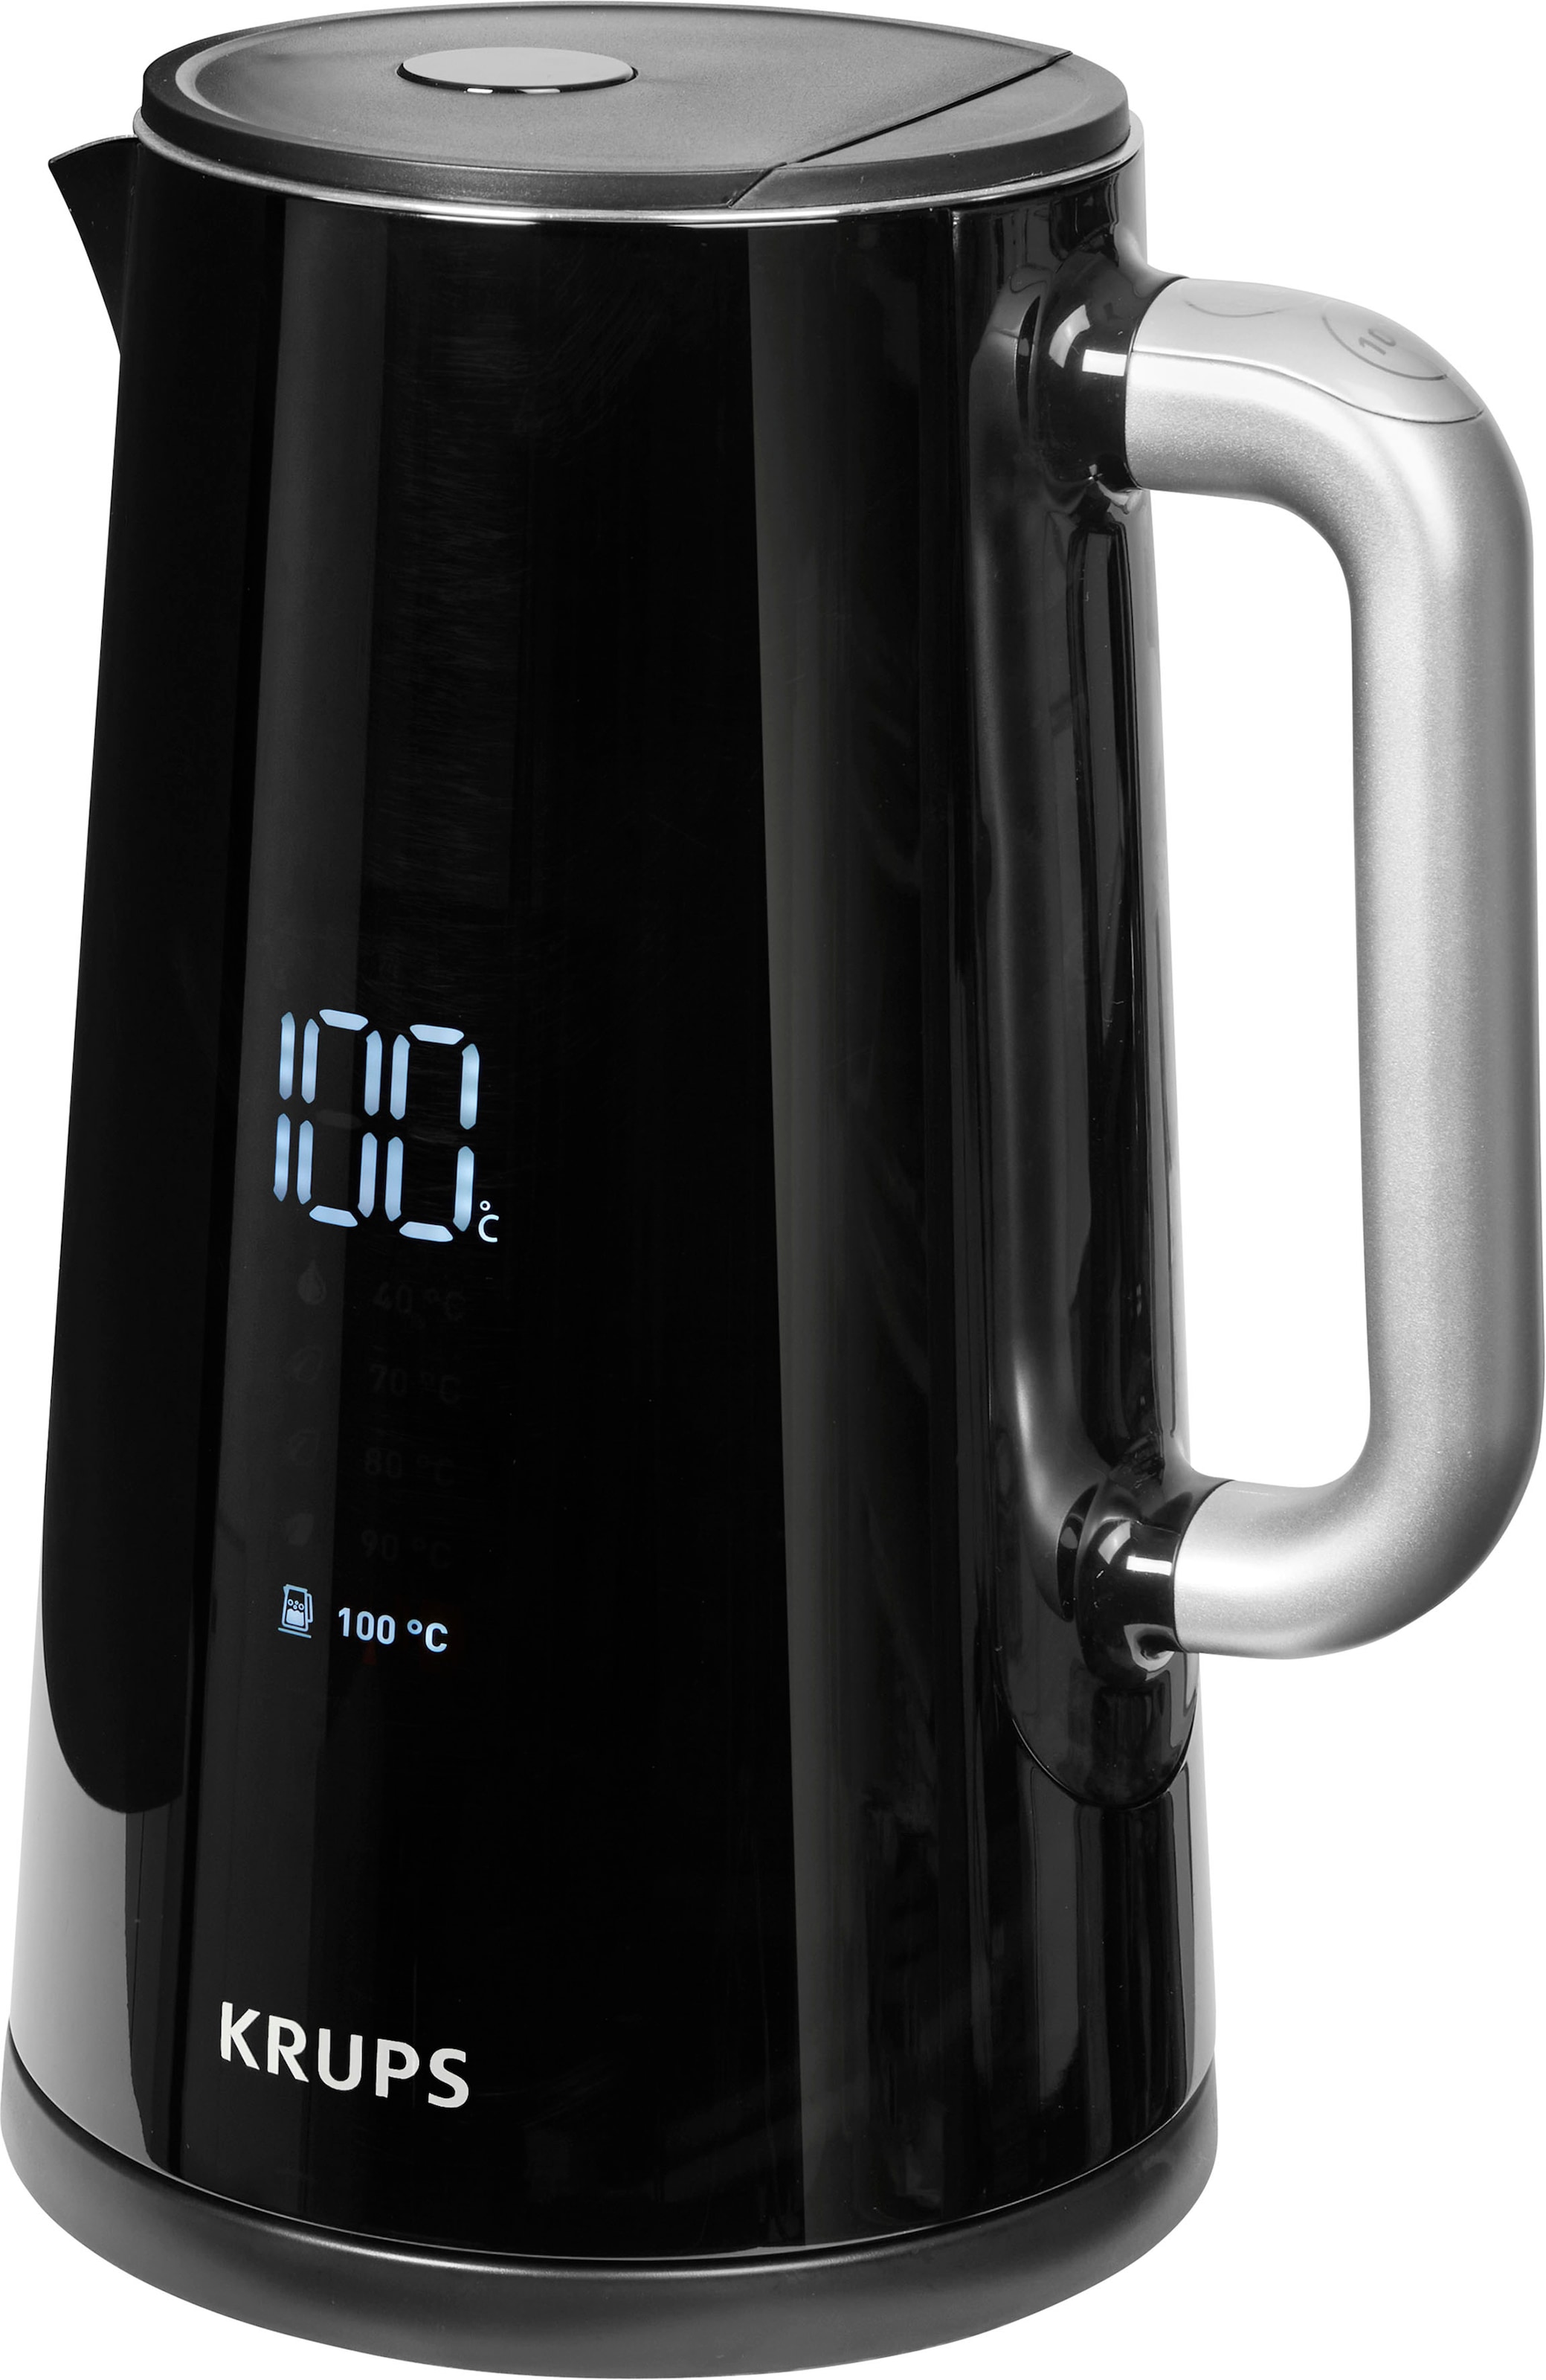 Krups Wasserkocher »BW8018 Smart'n Light«, 1,7 l, 1800 W, Digitalanzeige, 5 Temperaturstufen, 360°-Sockel, Abschaltautomatik